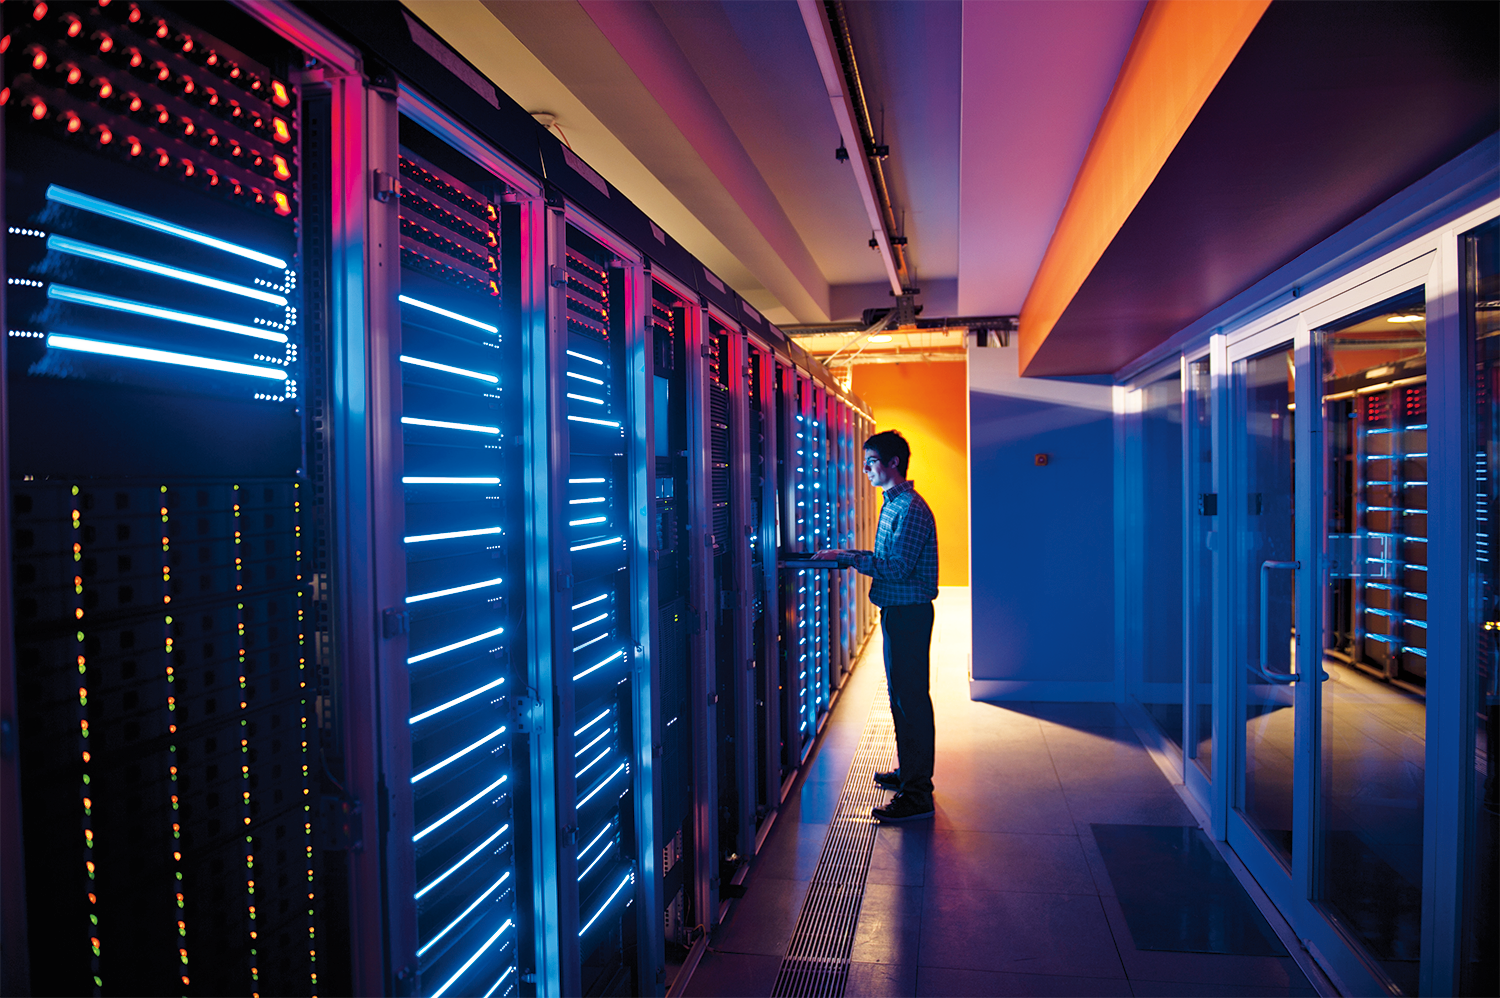 Stock image of computer servers